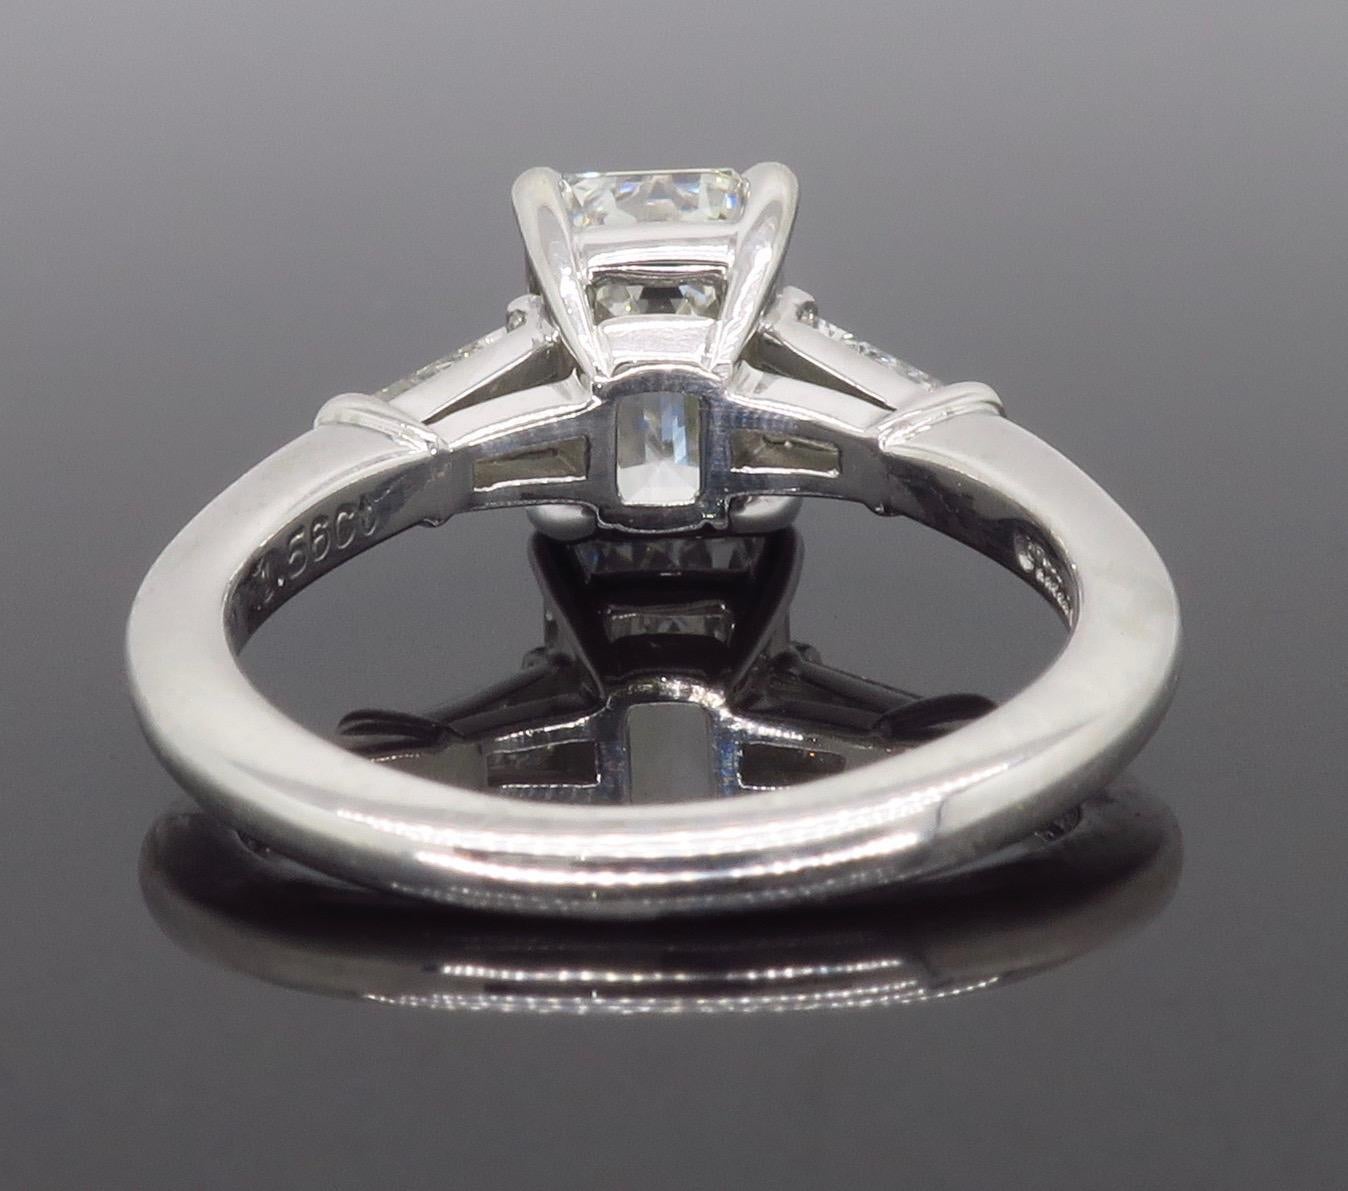 Classic Tiffany & Co. Emerald Cut Diamond Engagement Ring with Original Box 1